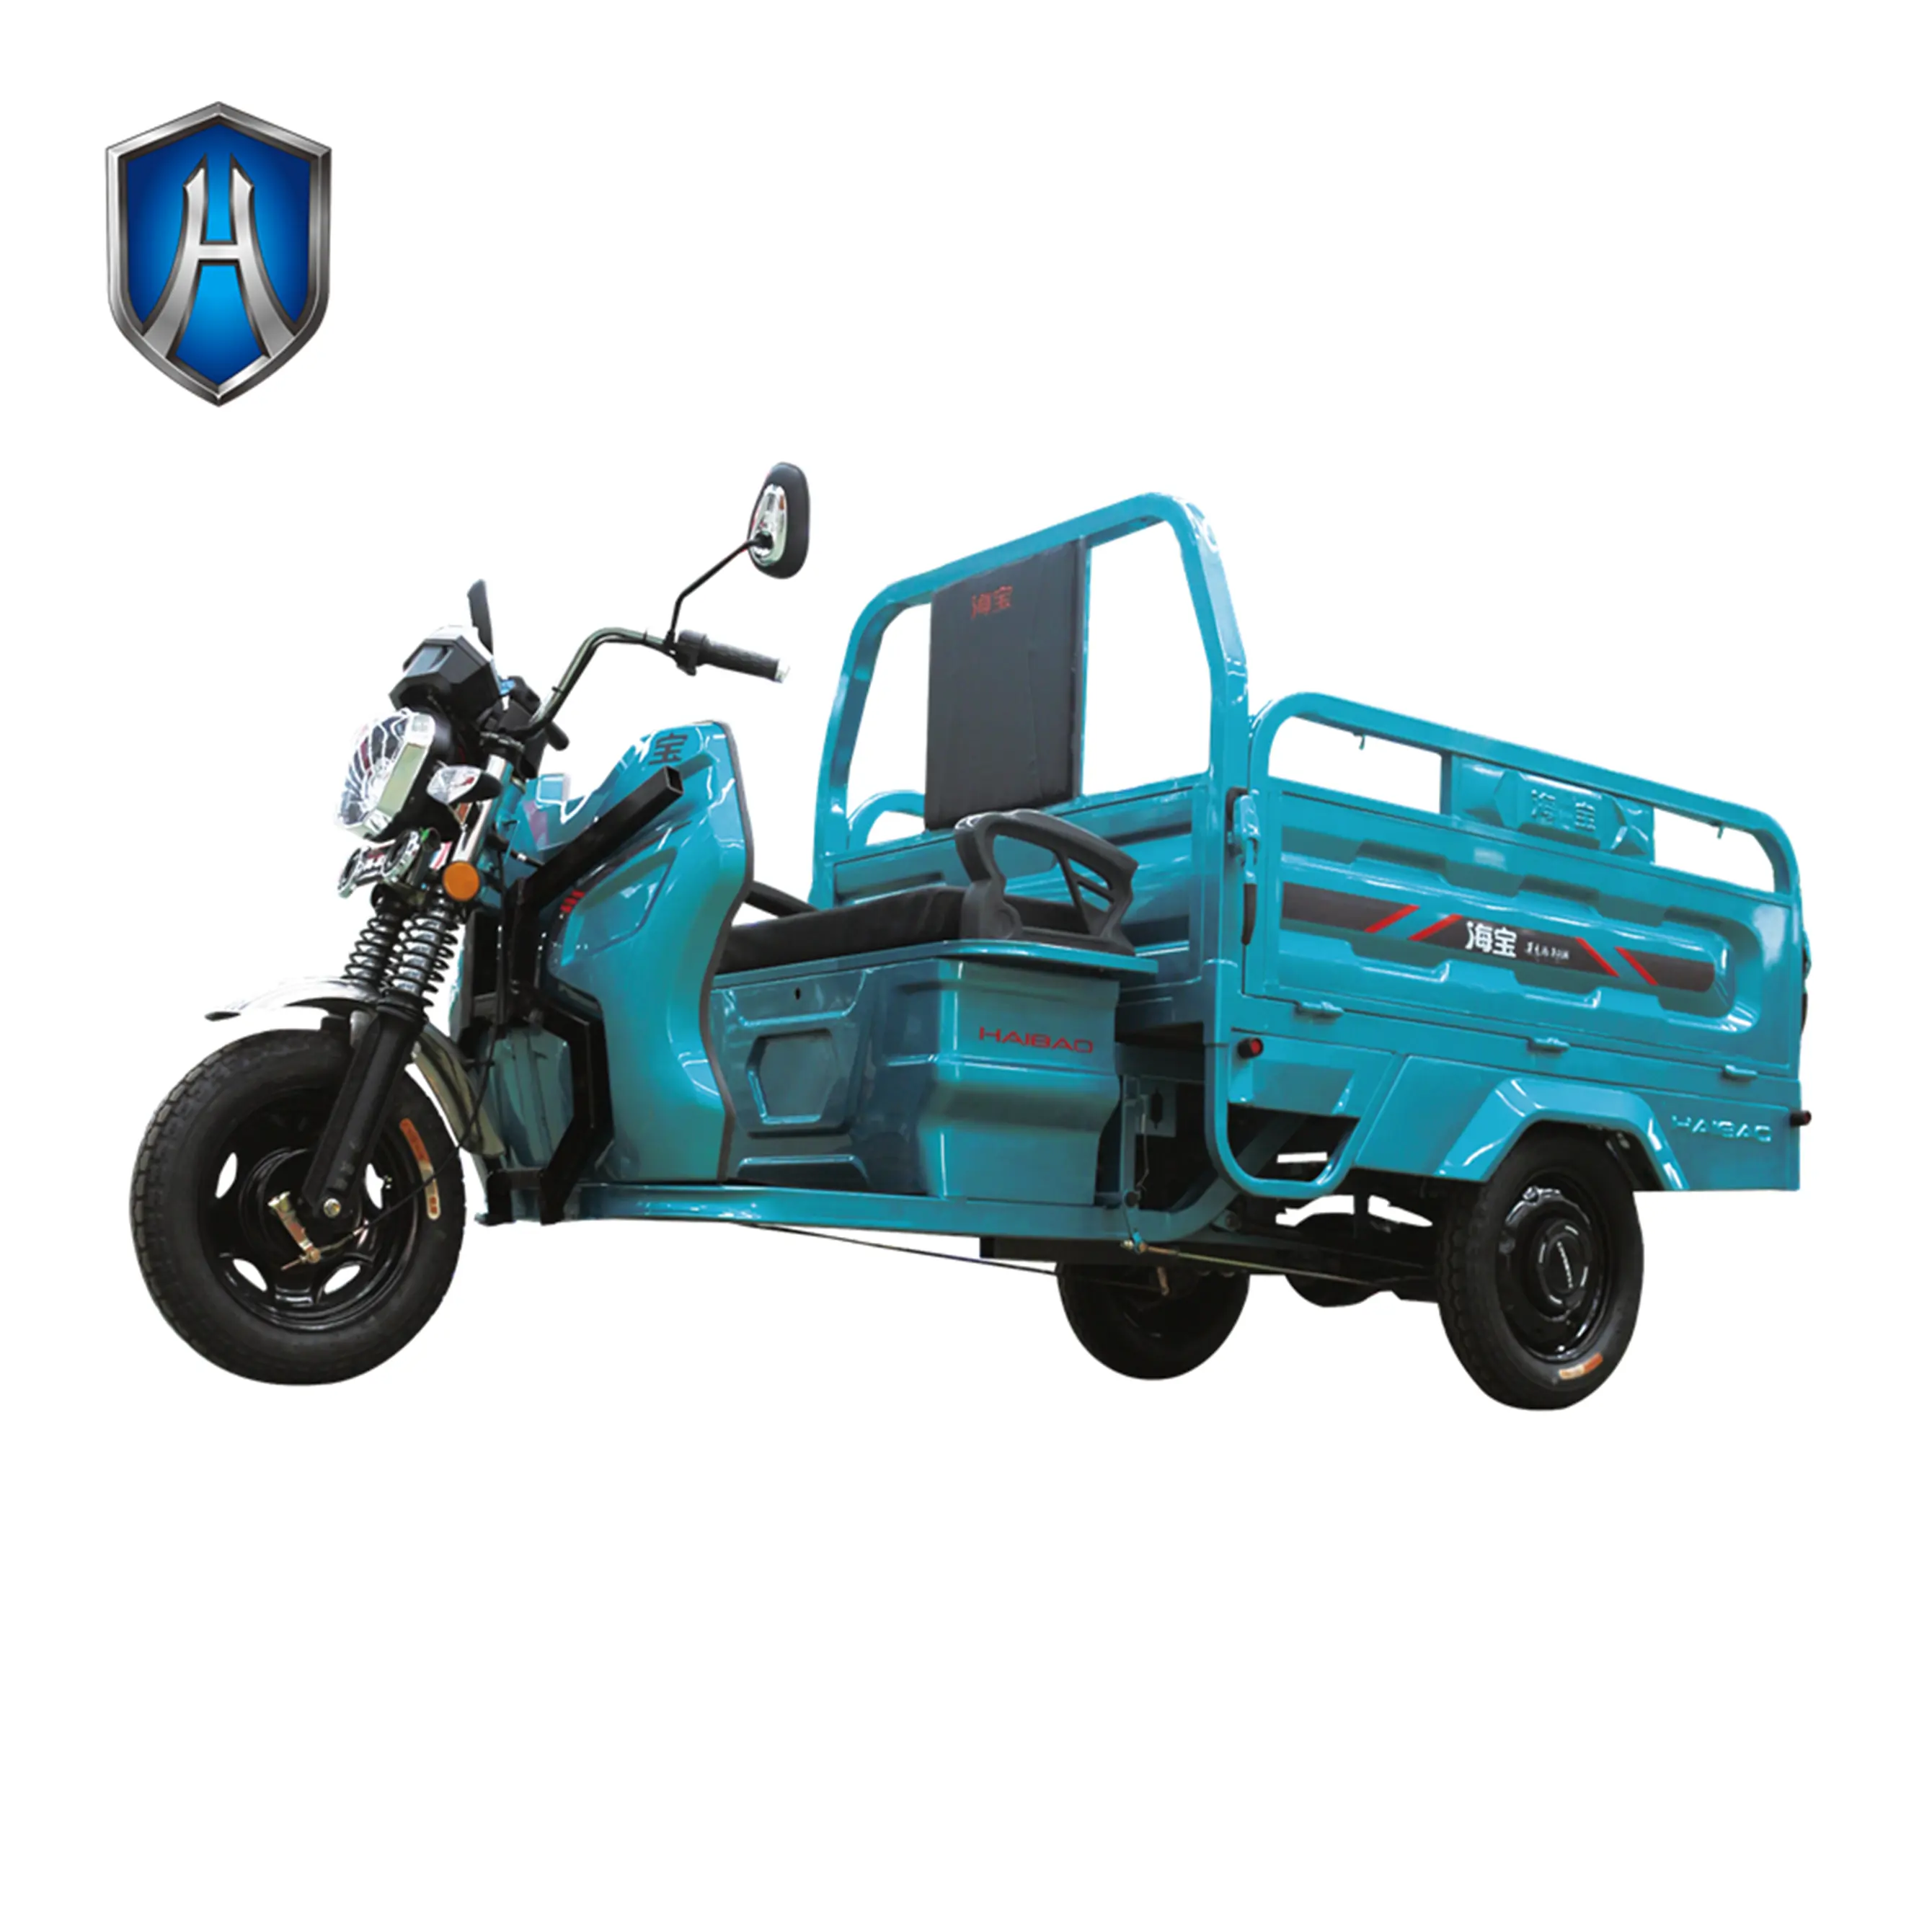 Triciclo eléctrico de 3 ruedas para adulto, triciclo eléctrico de carga, para motocicleta pequeña